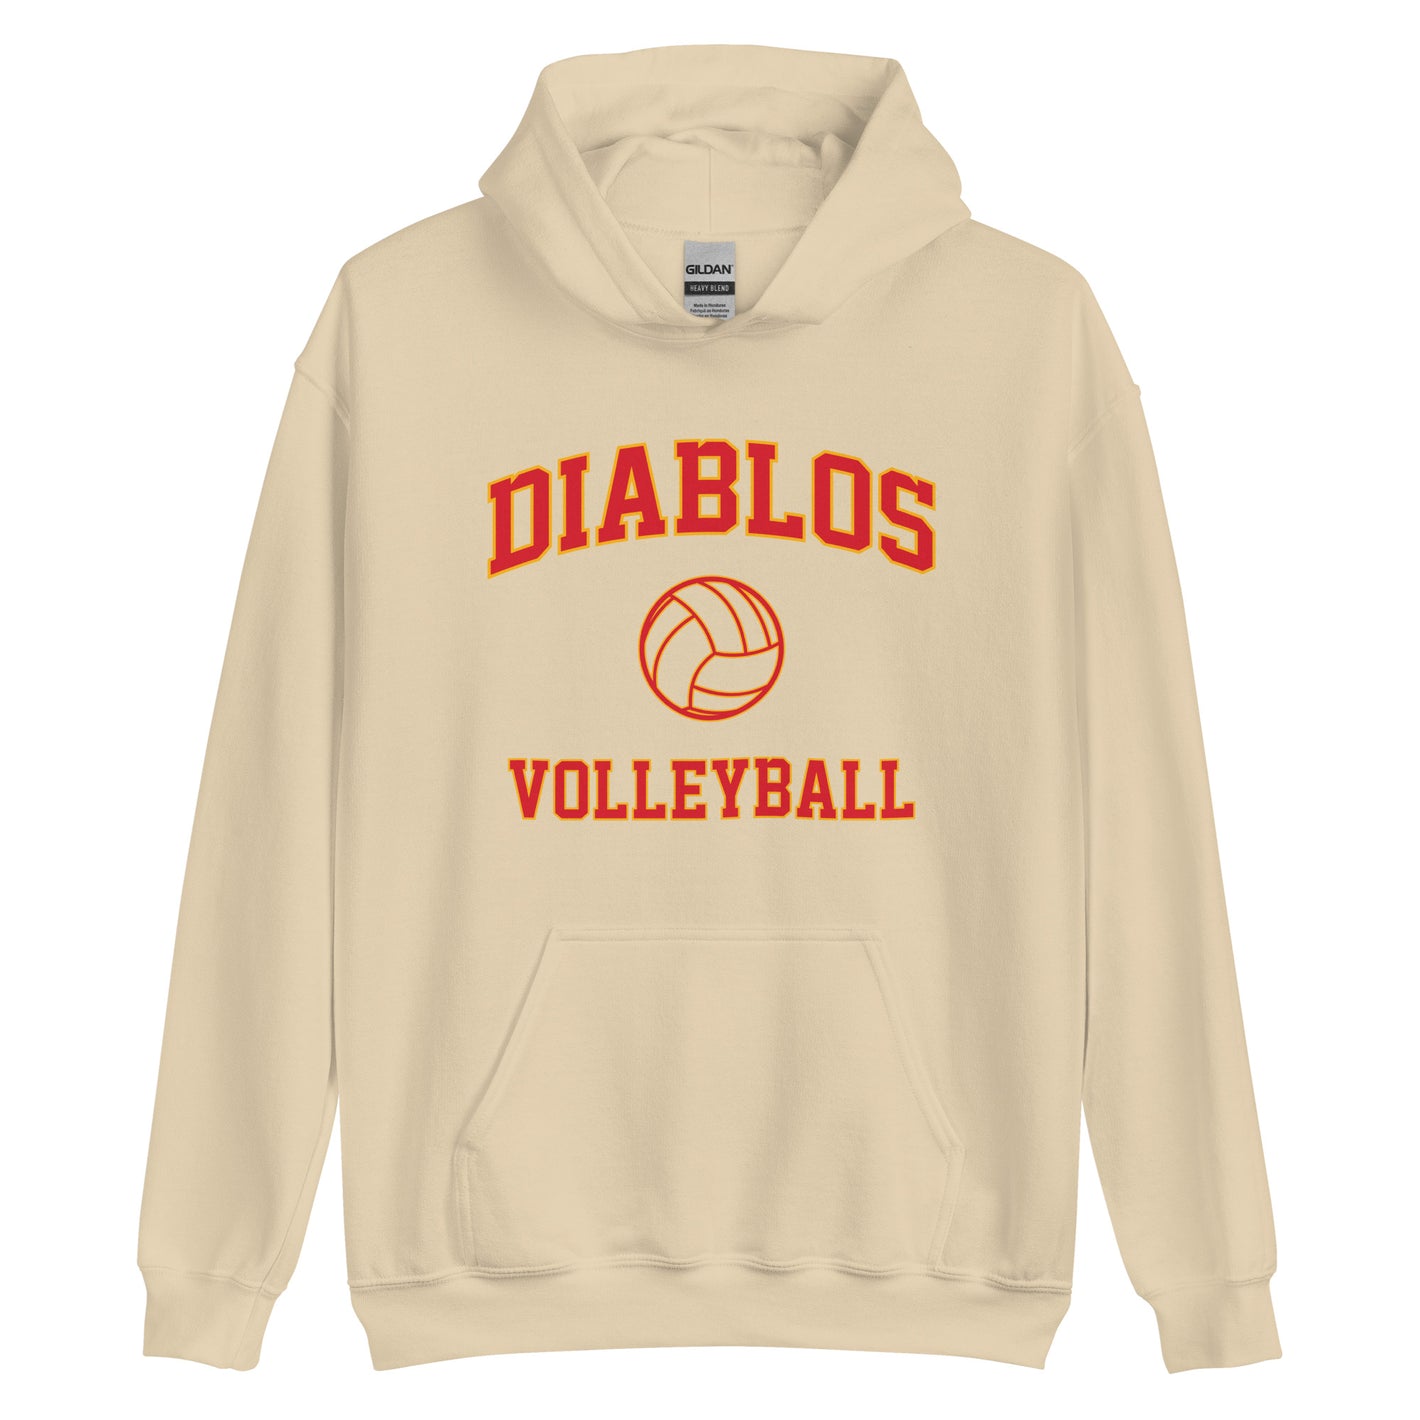 Diablos Volleyball Unisex Hoodie